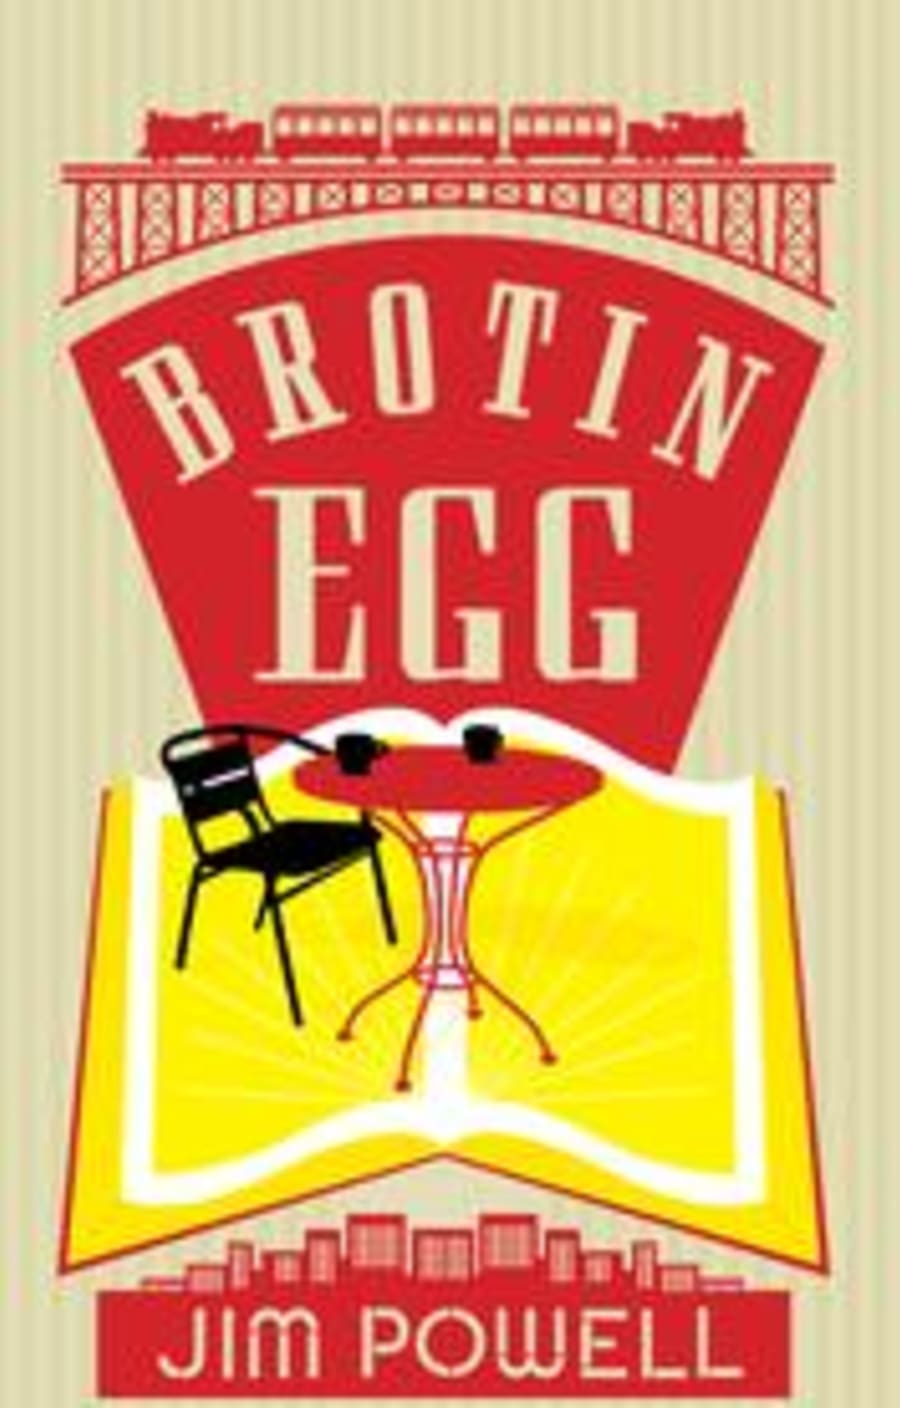 Brotin egg